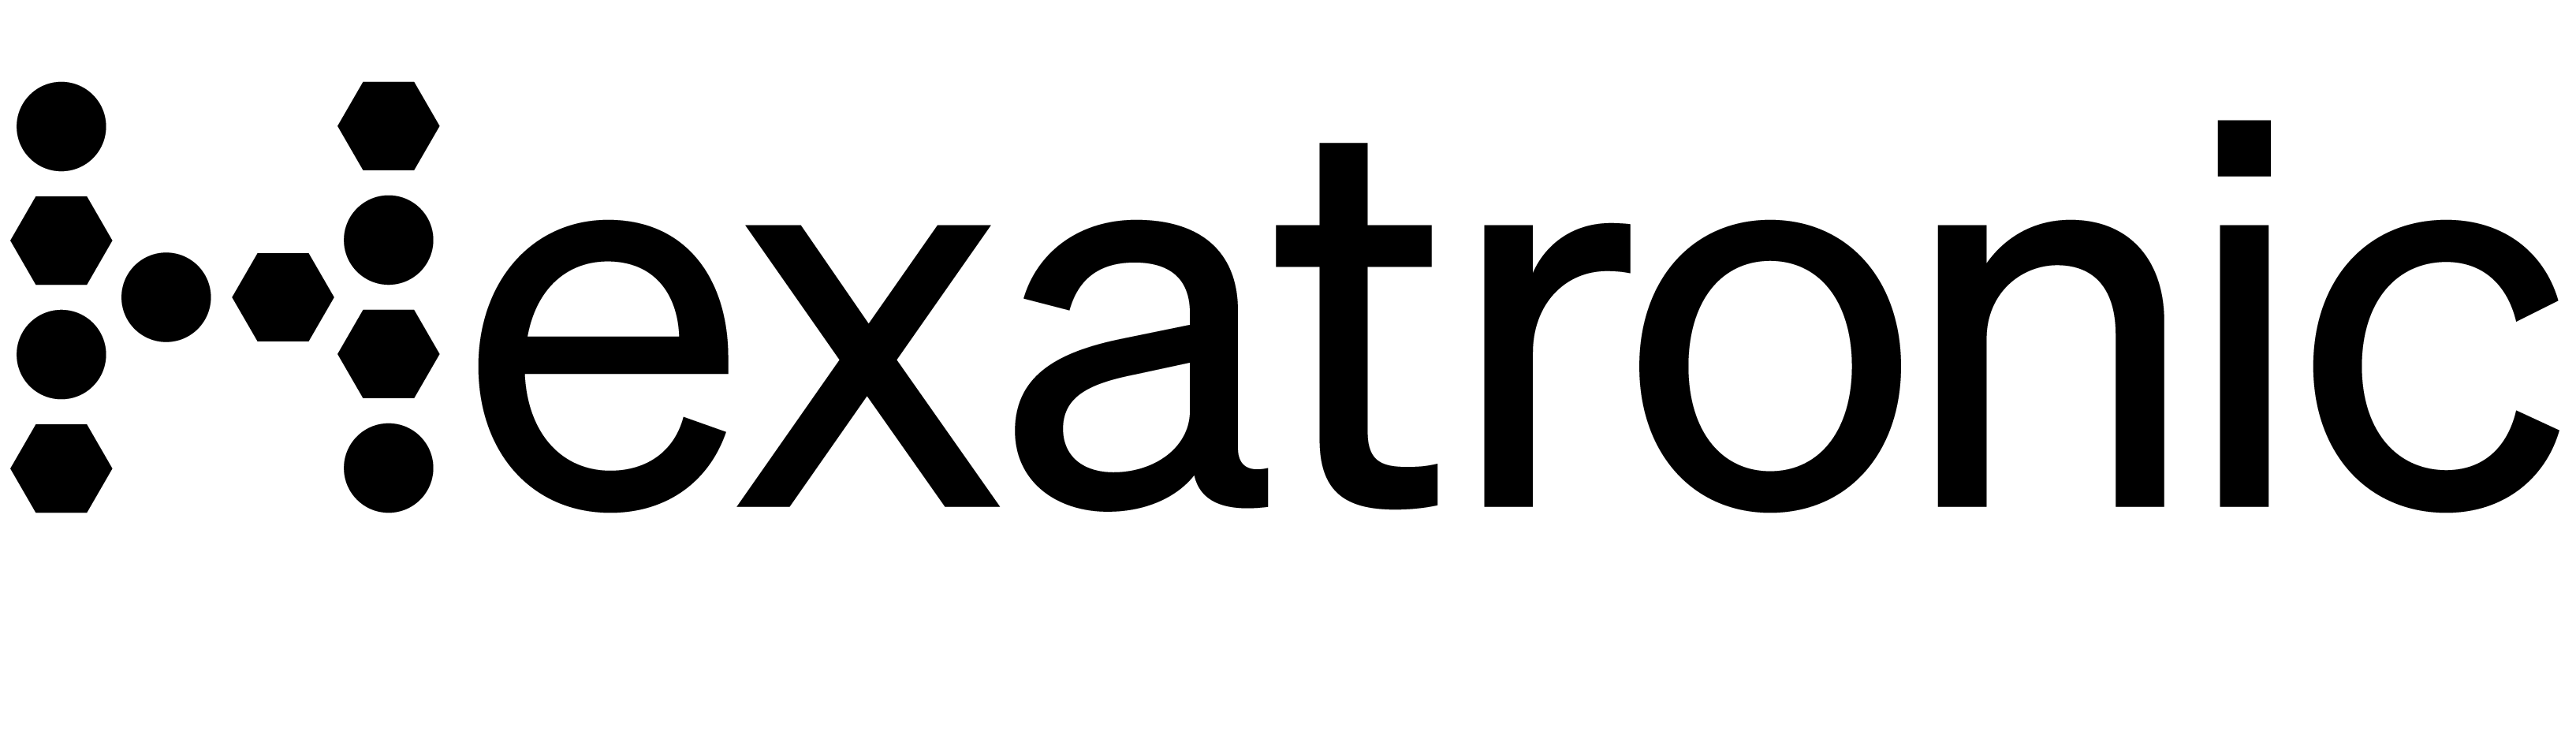 Logo Hexatronic GmbH